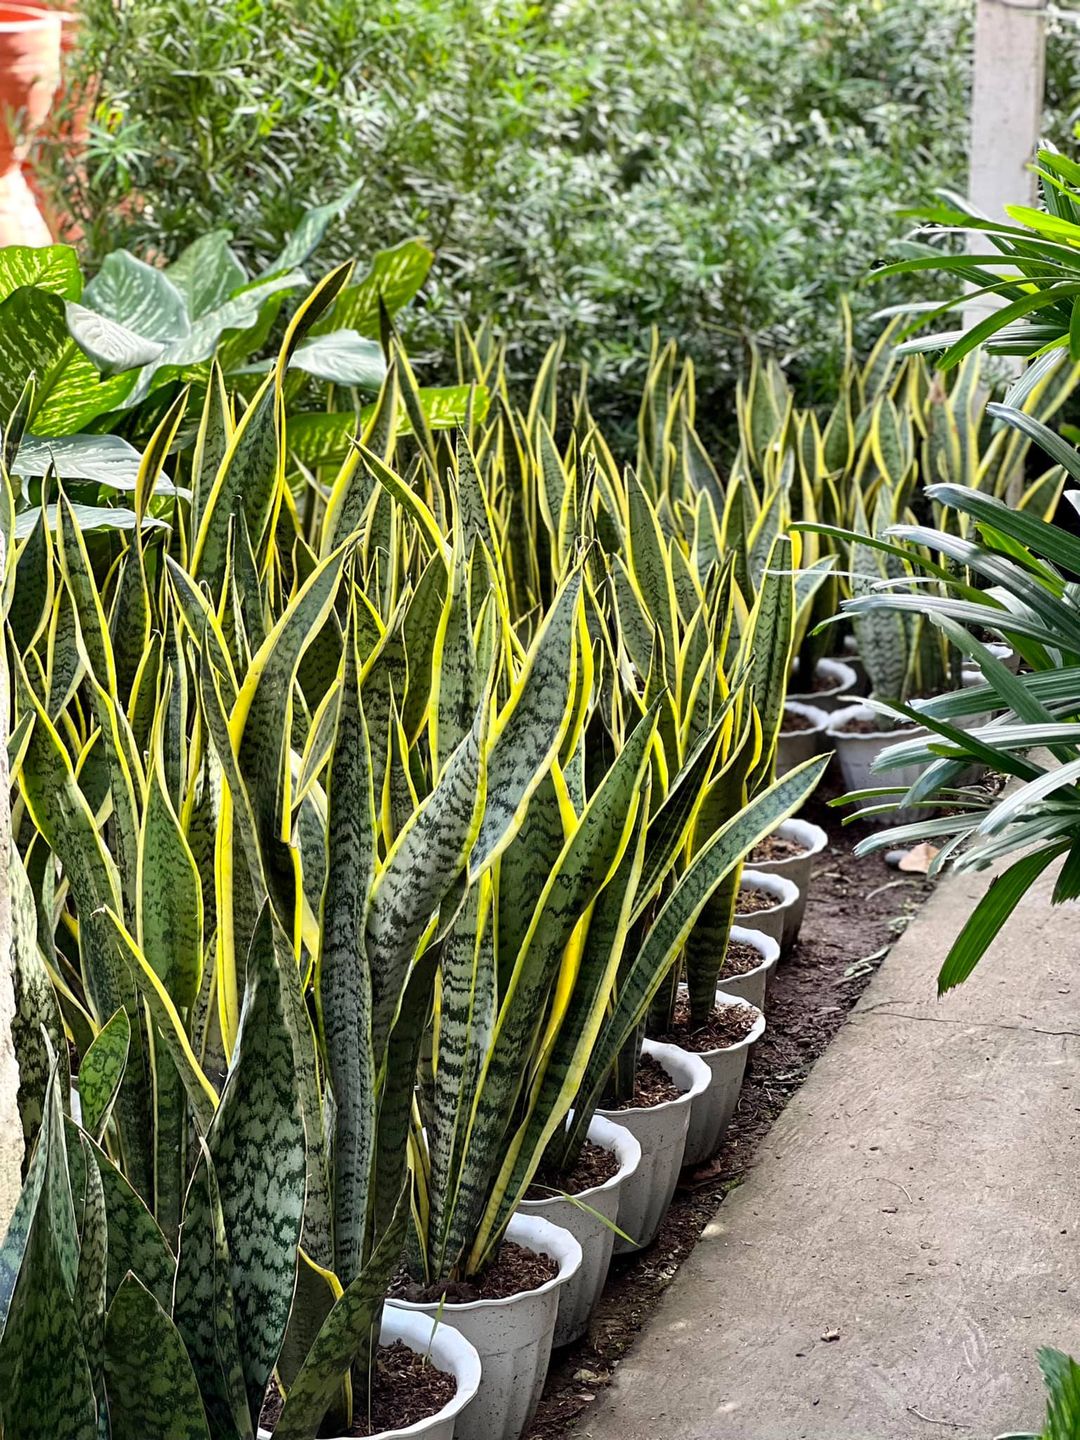 snake repellent plants